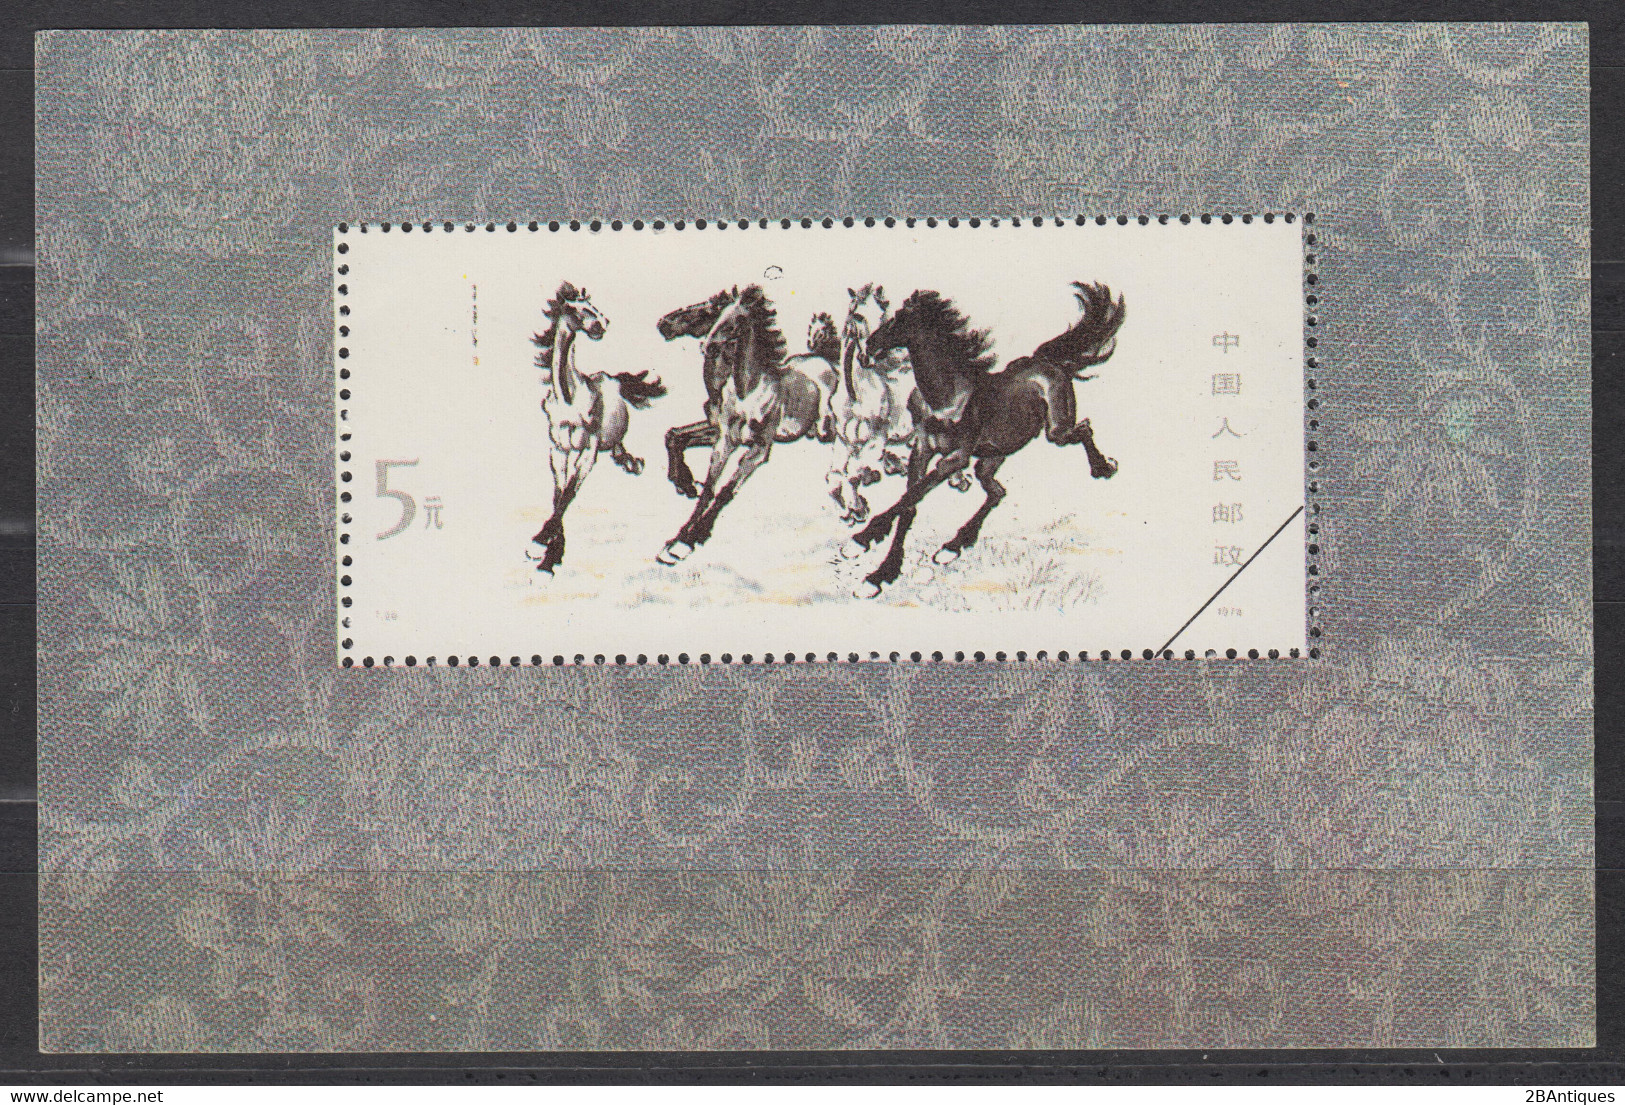 PR CHINA 1978 - Galloping Horses Minisheet Cinderella Stamp - Prove E Ristampe